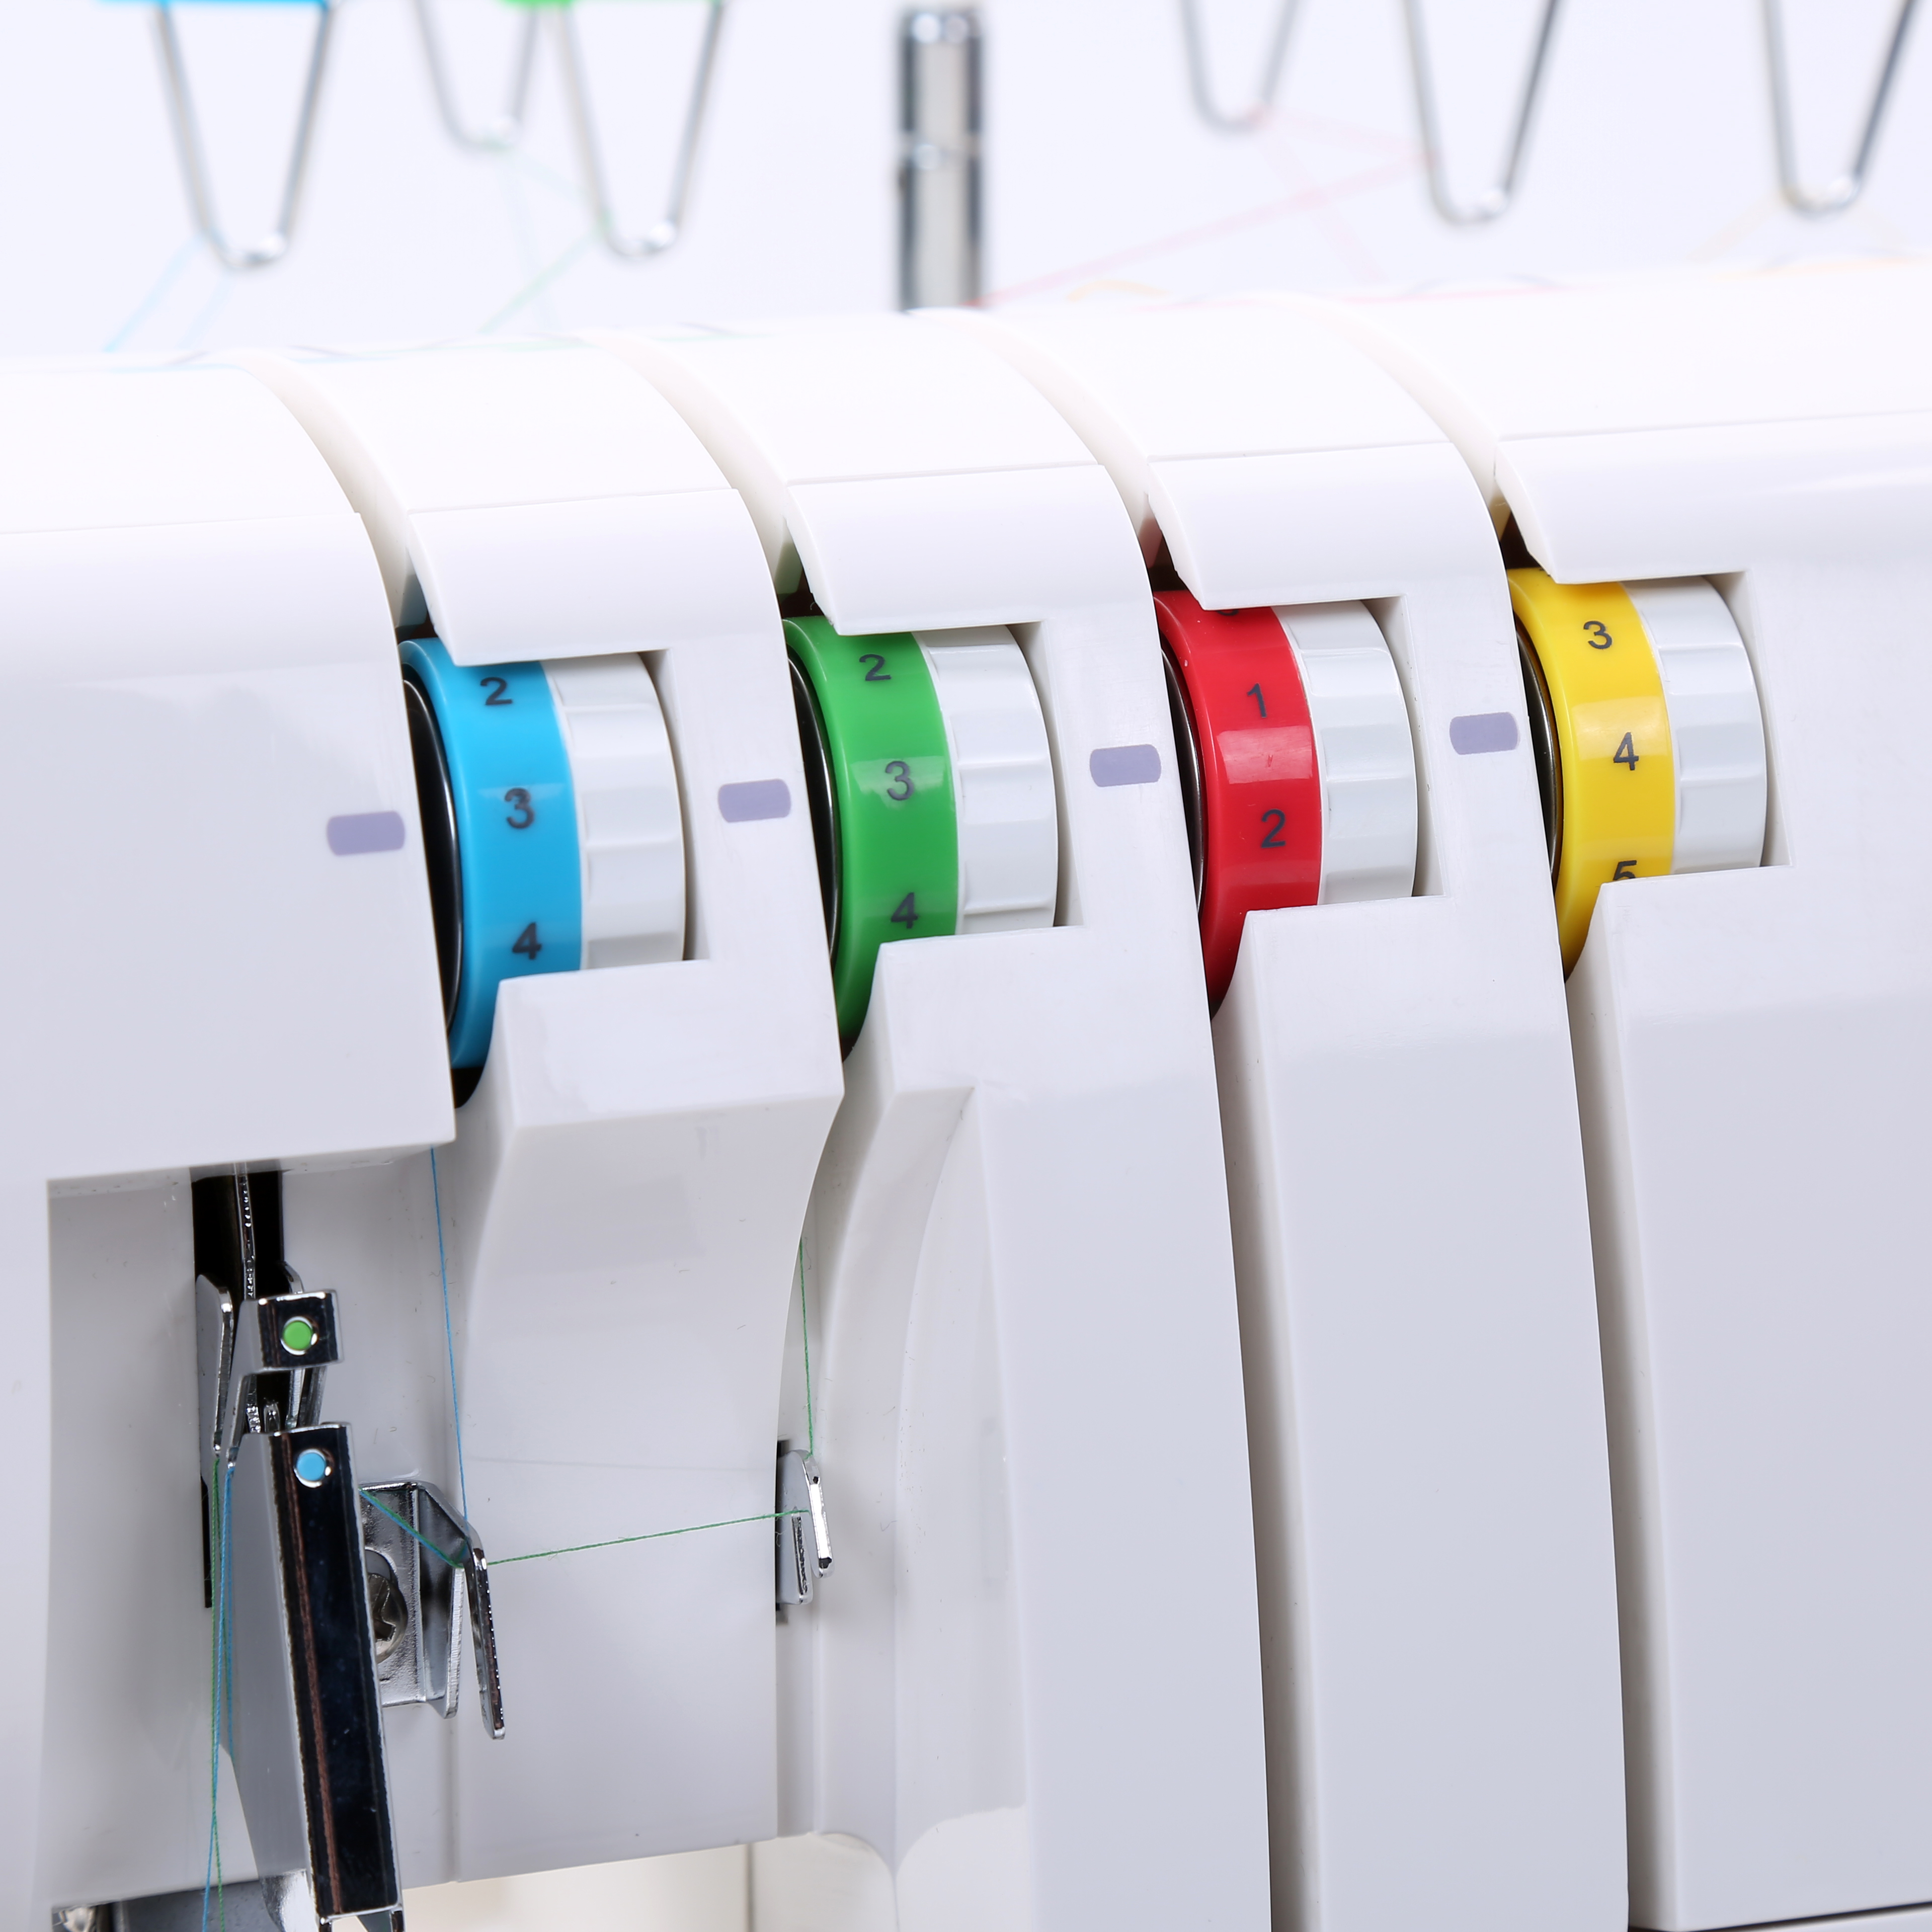 BAI Household Stitch Sewing Overlock Machine with Various Overlocking Methods